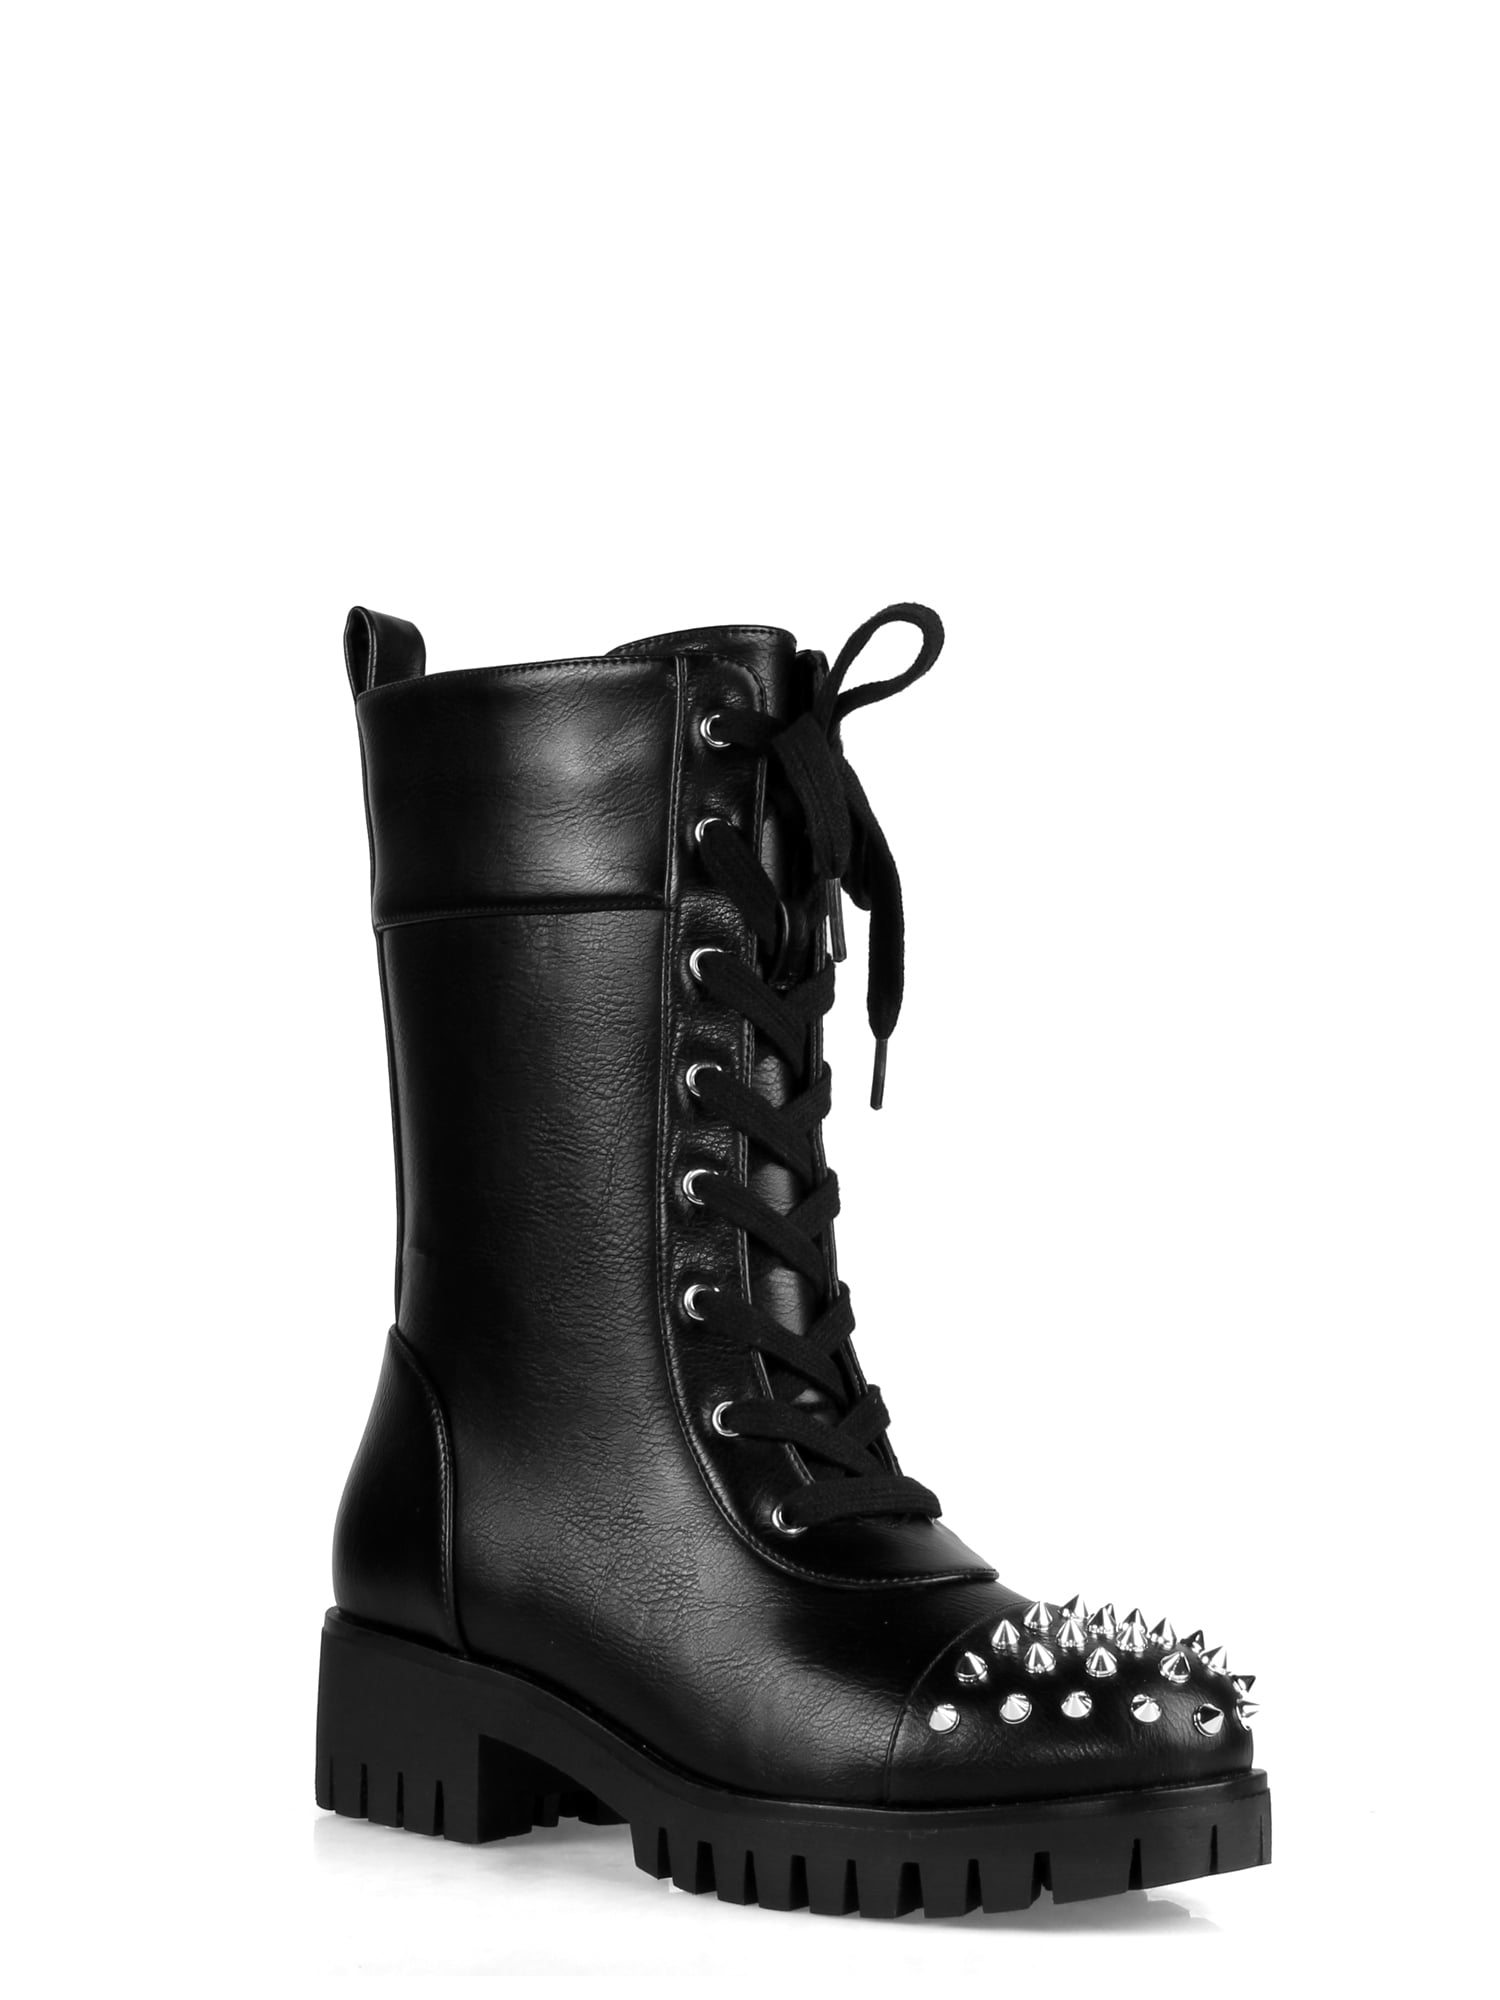 Ochotoros Lace Up Women's Spiky Combat Boots in Black - Walmart.com